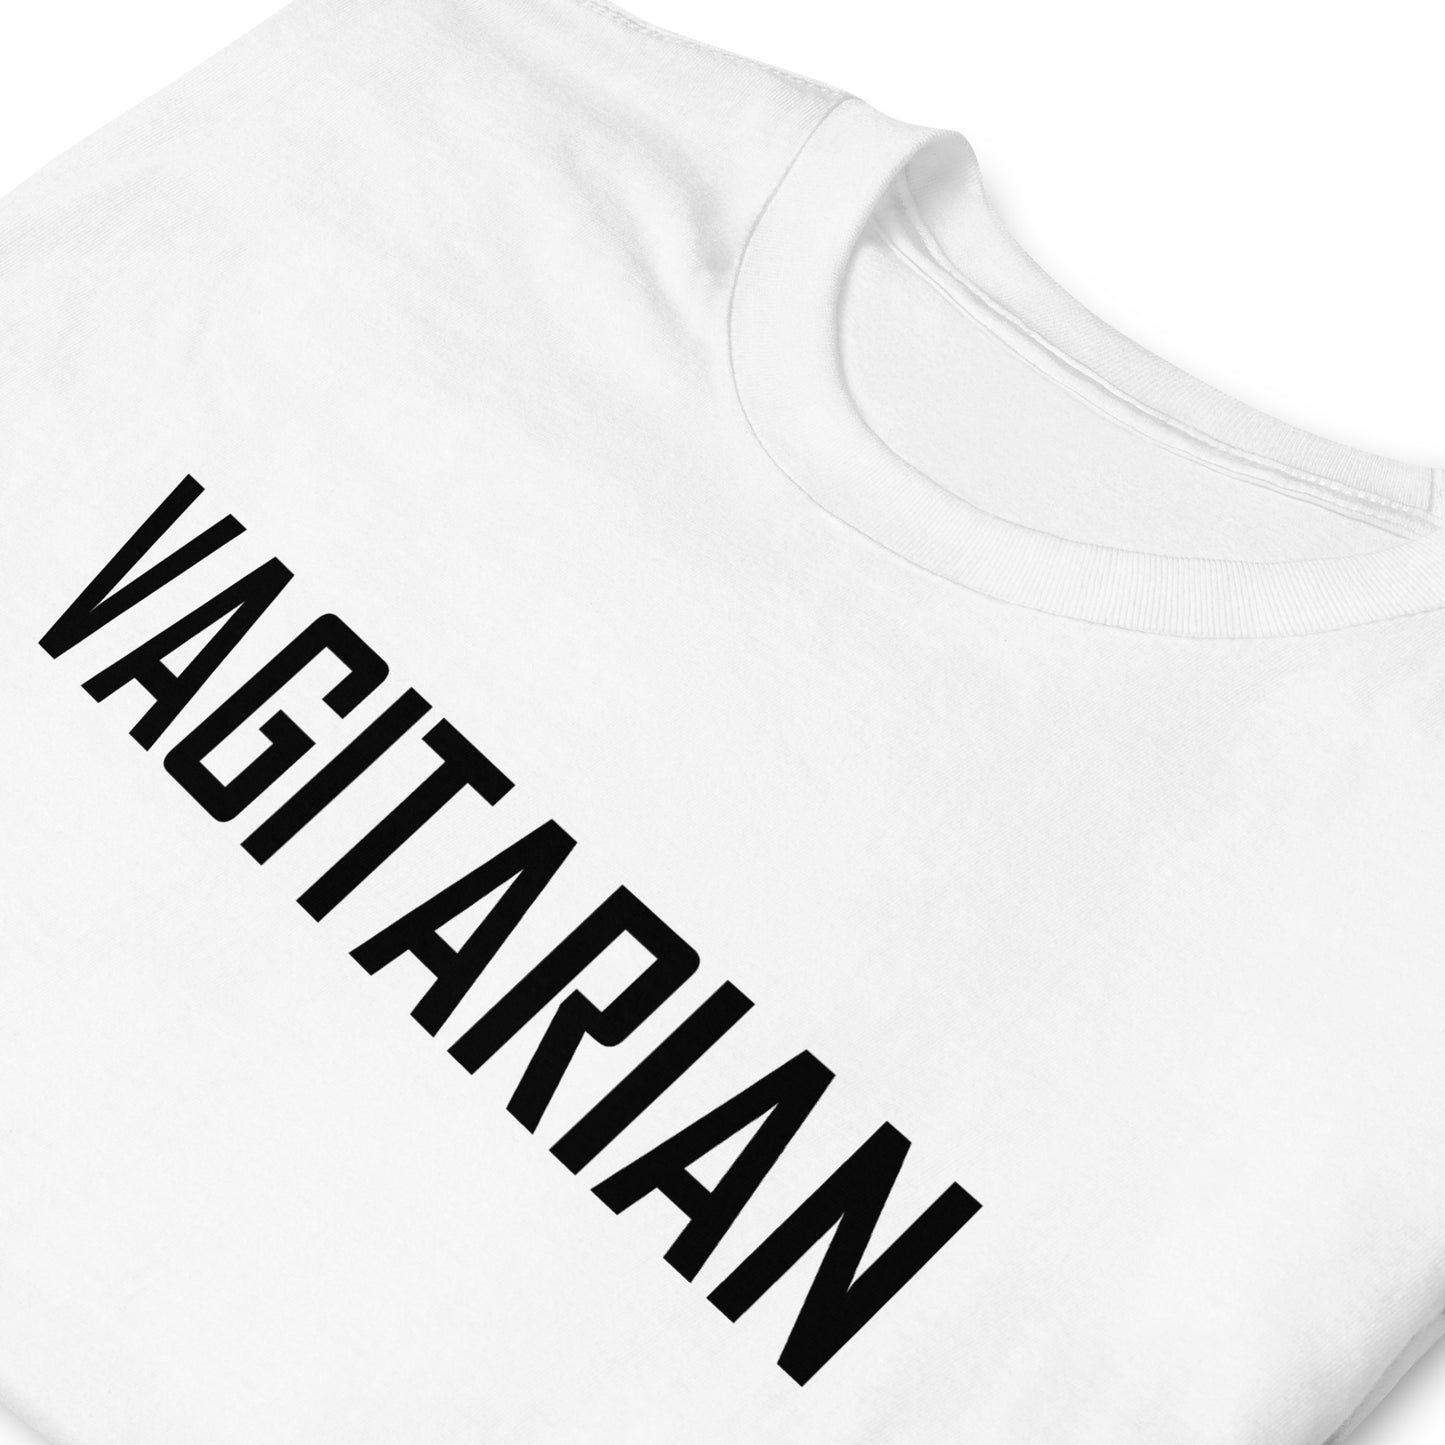 VAGITARIAN Short-Sleeve Unisex T-Shirt